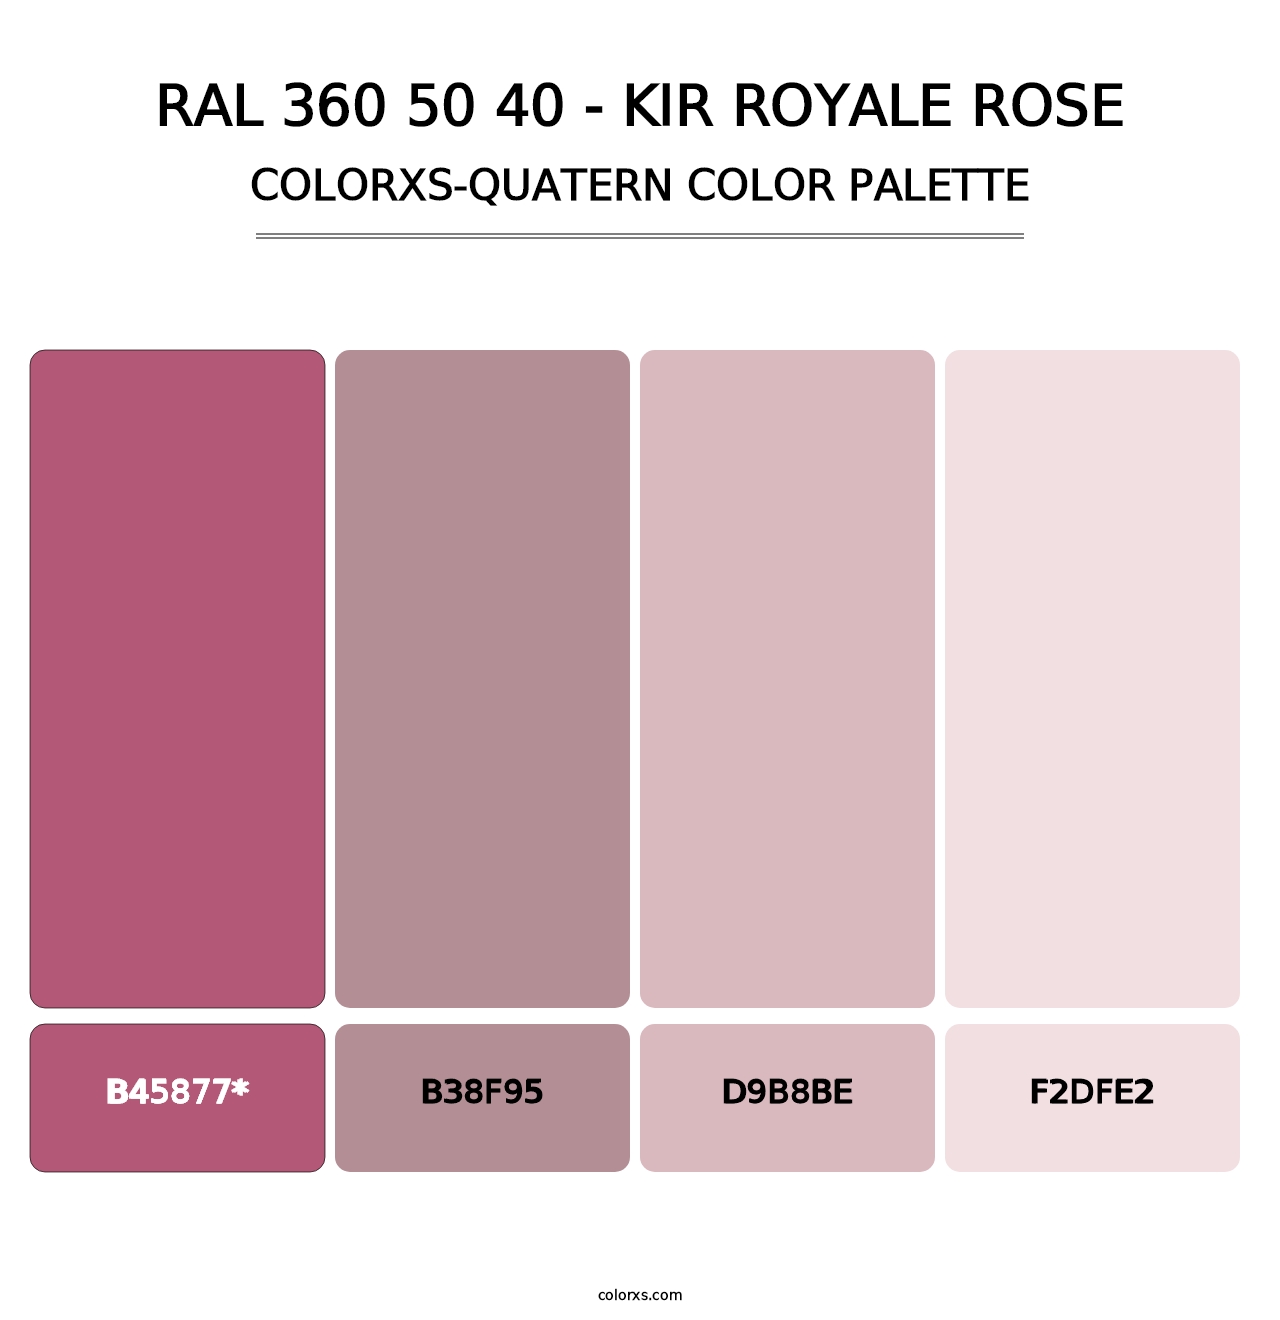 RAL 360 50 40 - Kir Royale Rose - Colorxs Quatern Palette